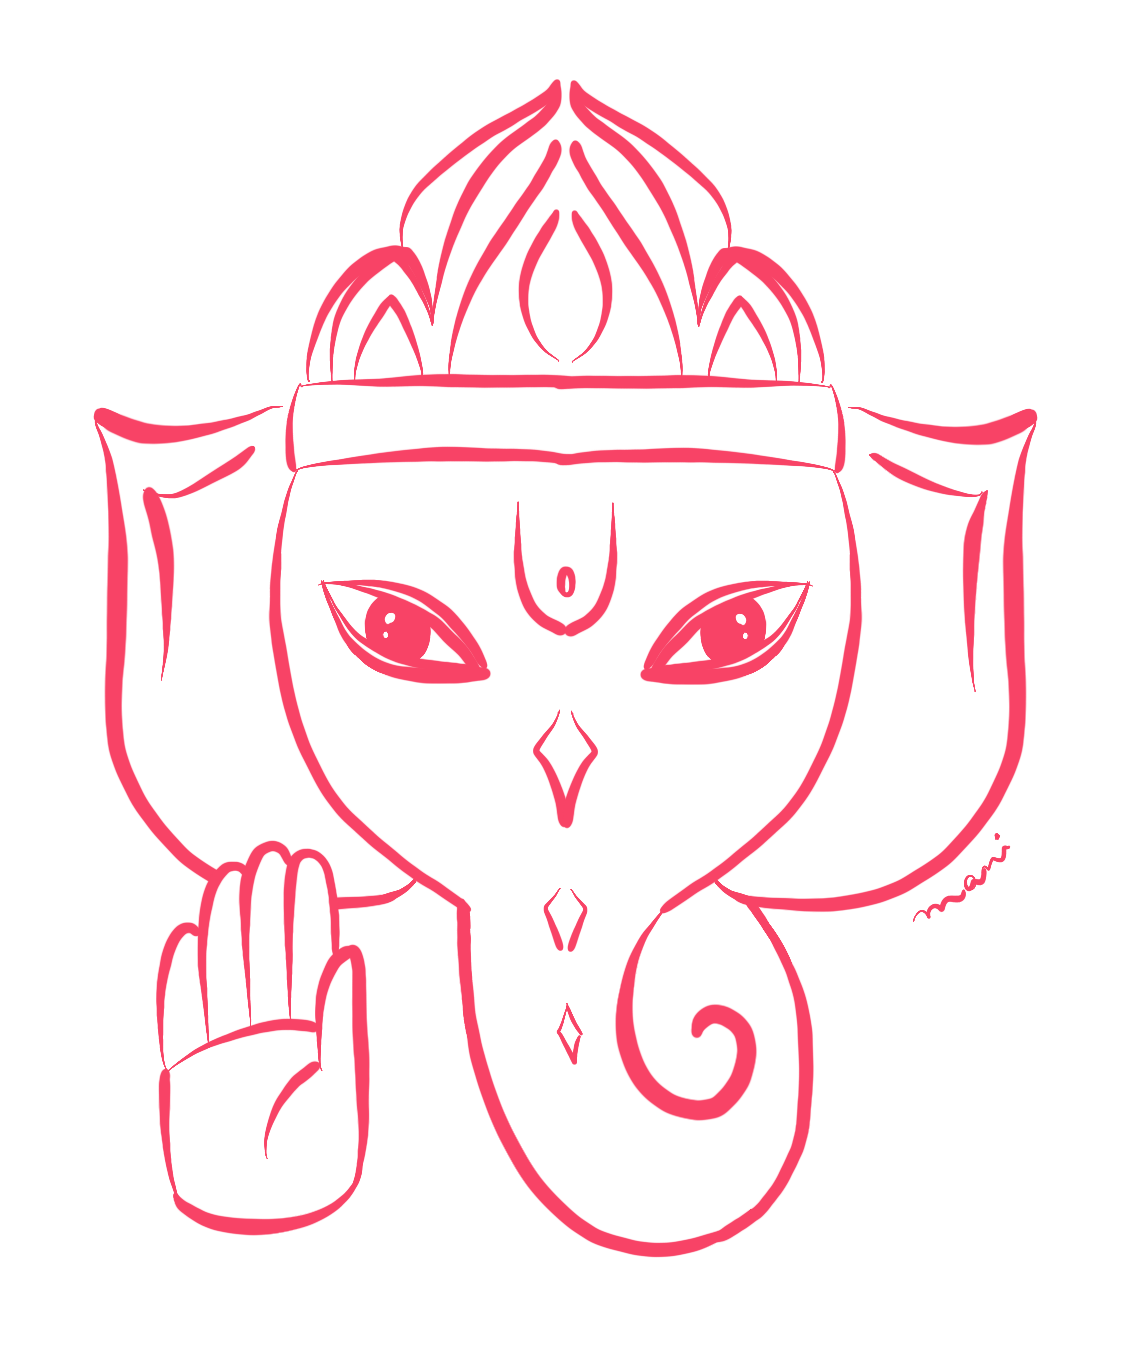 Ganesha1